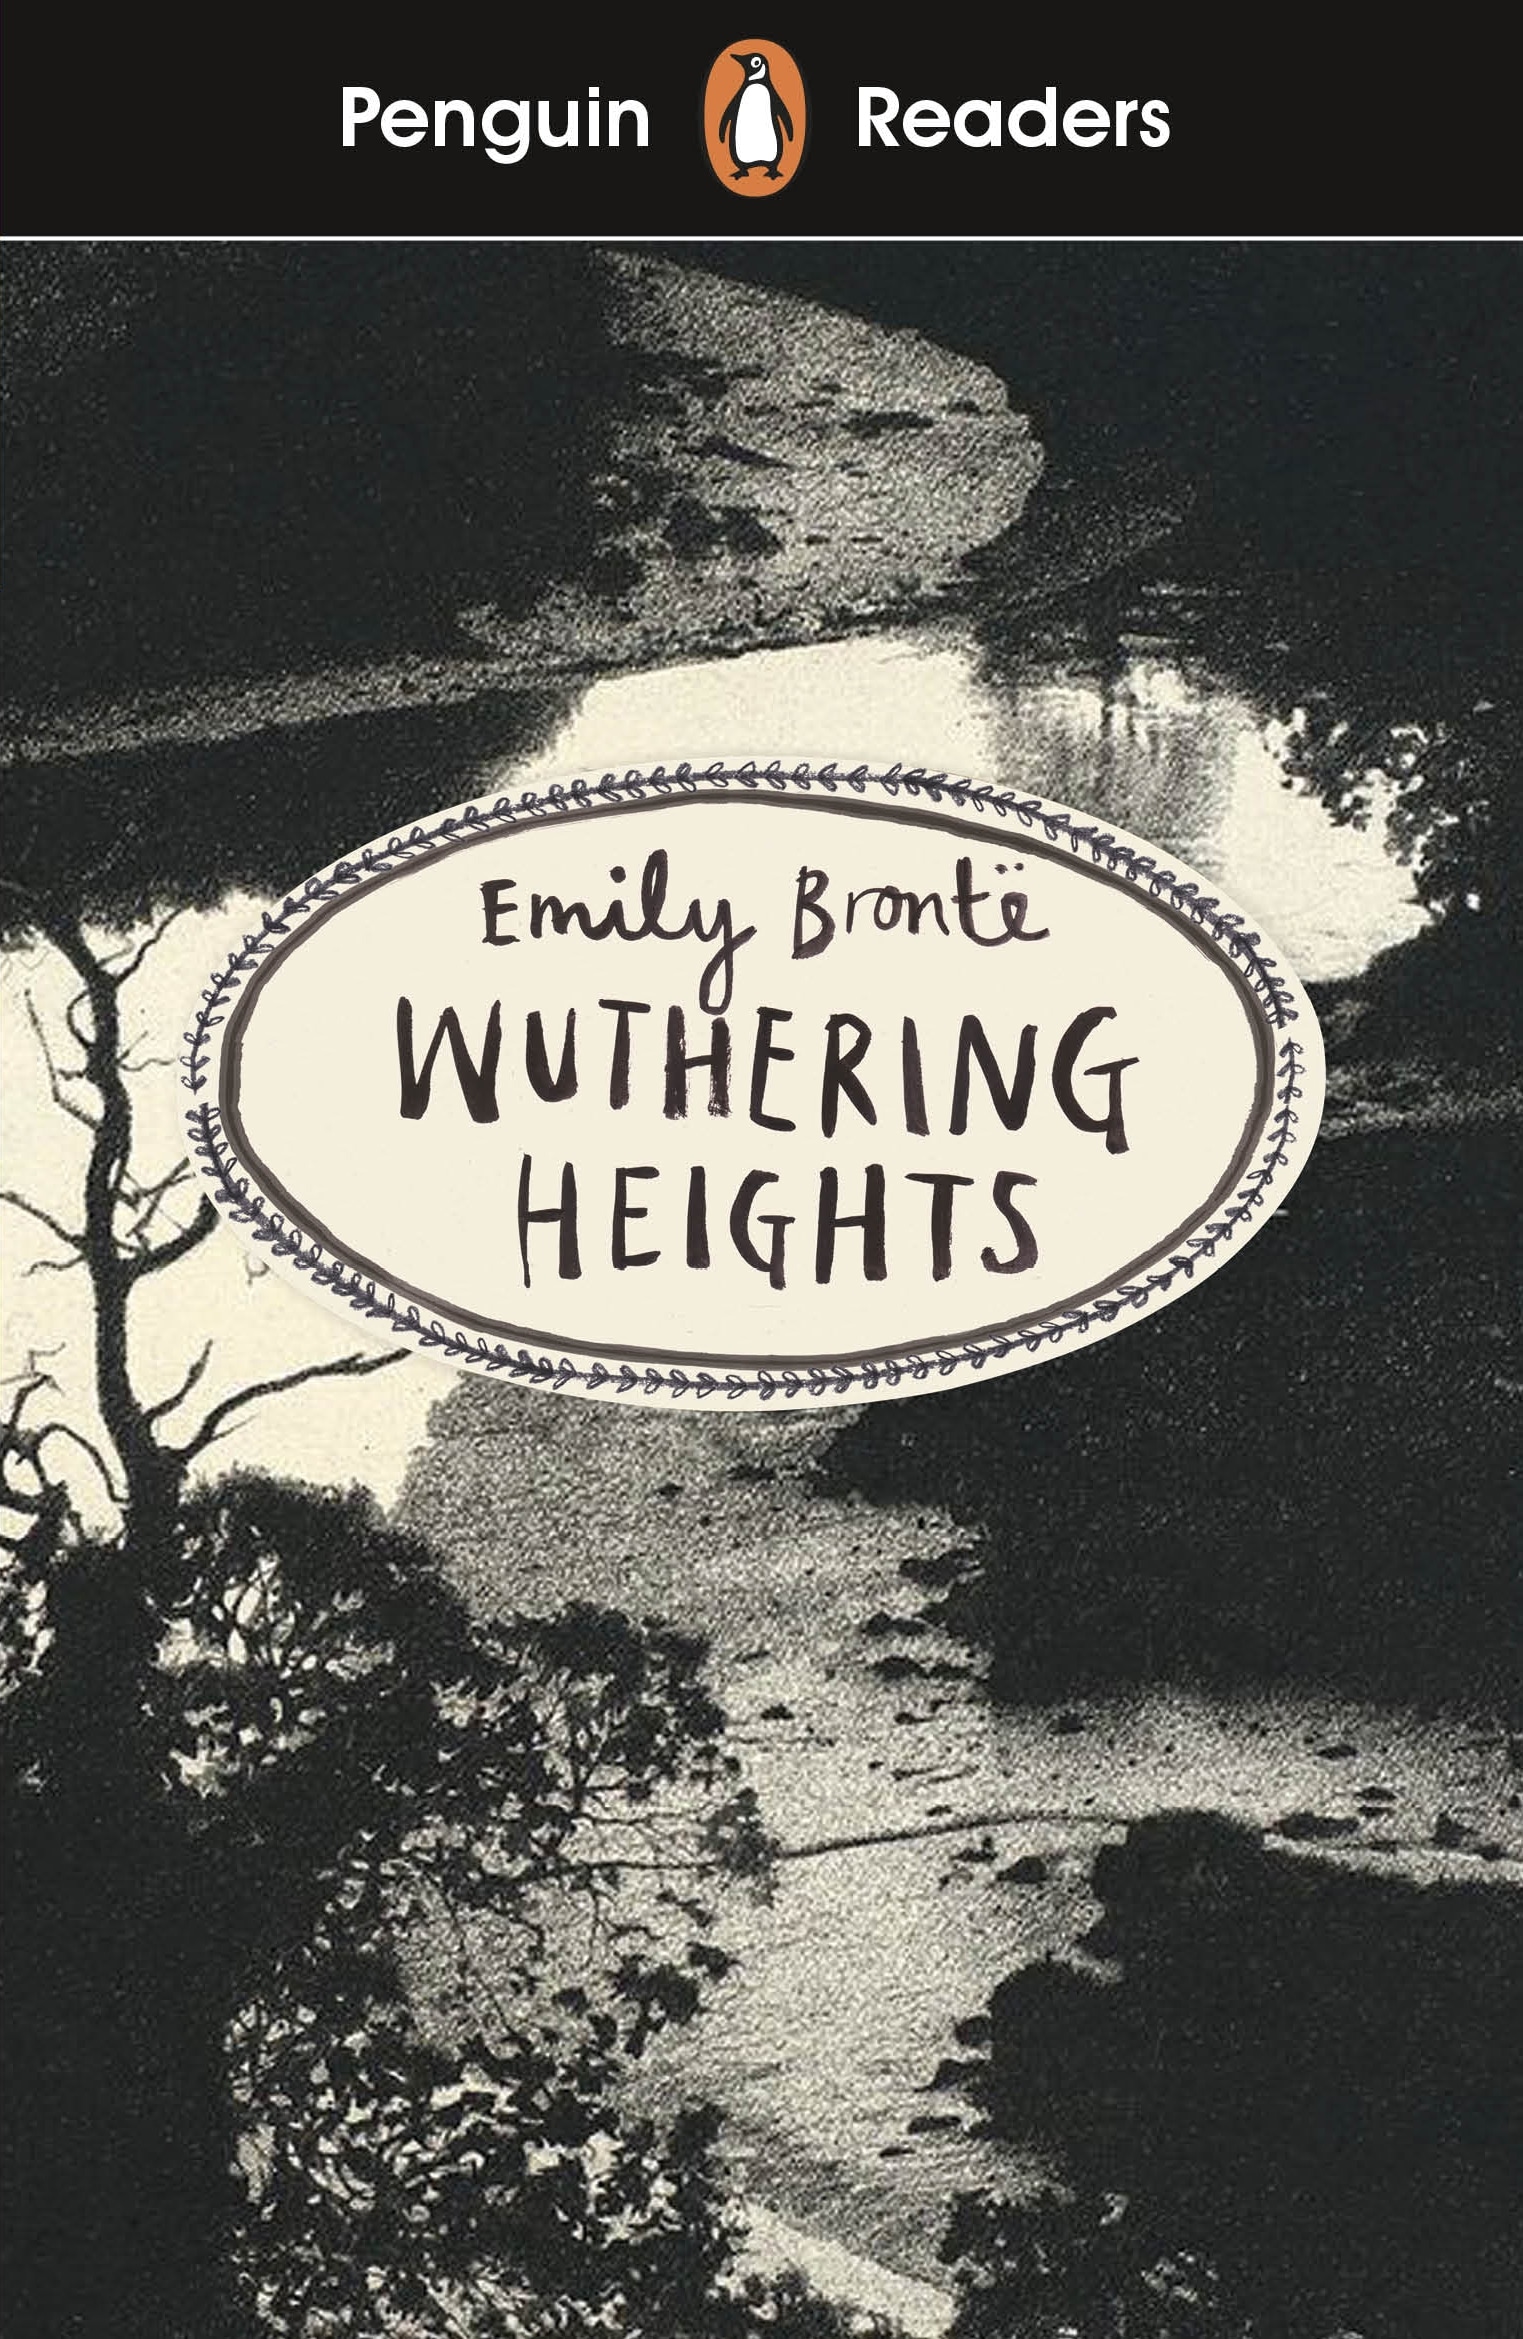 Book “Penguin Readers Level 5: Wuthering Heights (ELT Graded Reader)” by Emily Brontë — September 5, 2019